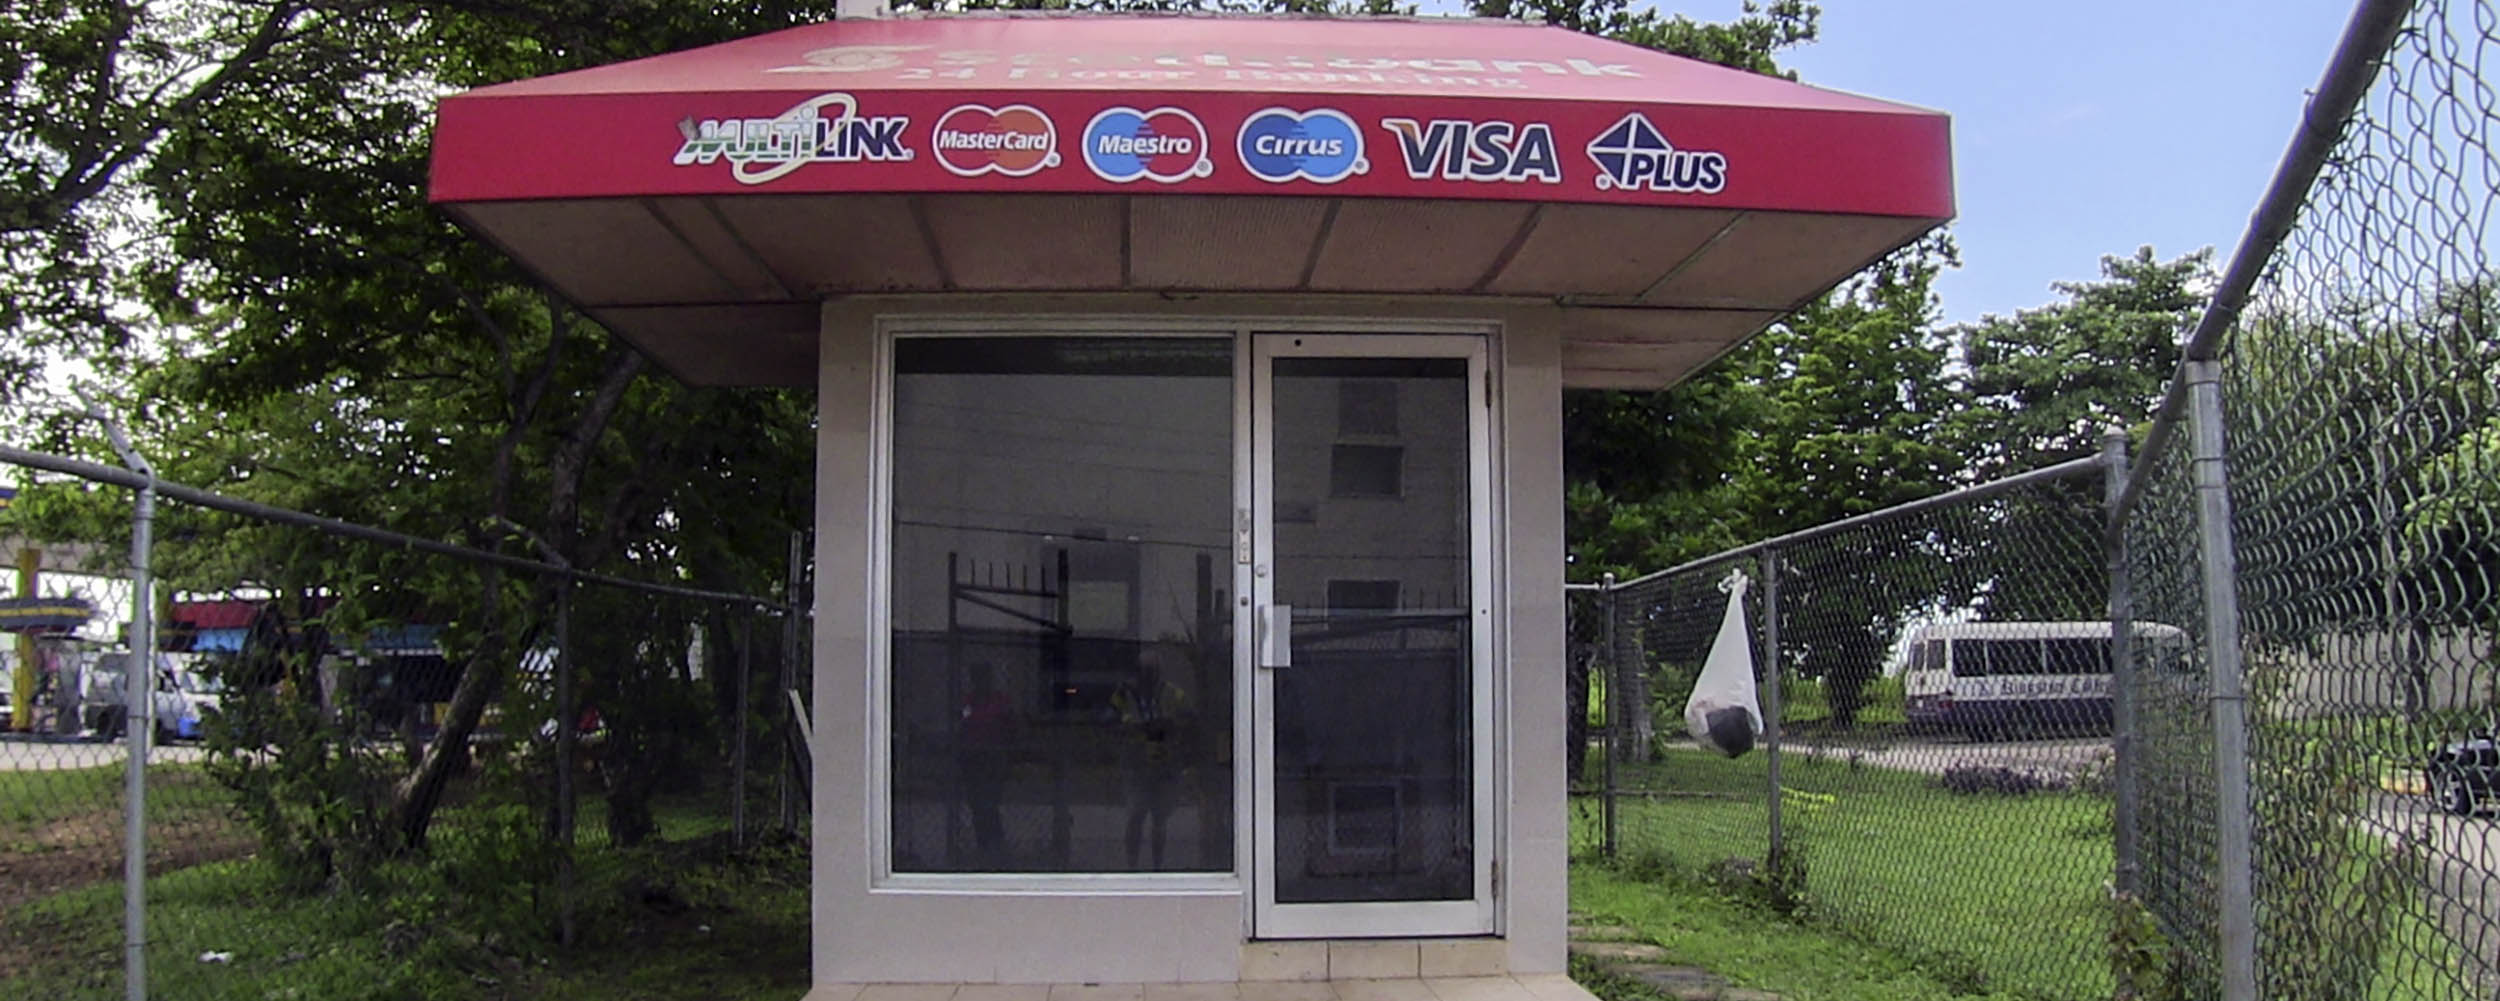 Scoticabank ATM - Rutland Point - Negril Jamaica